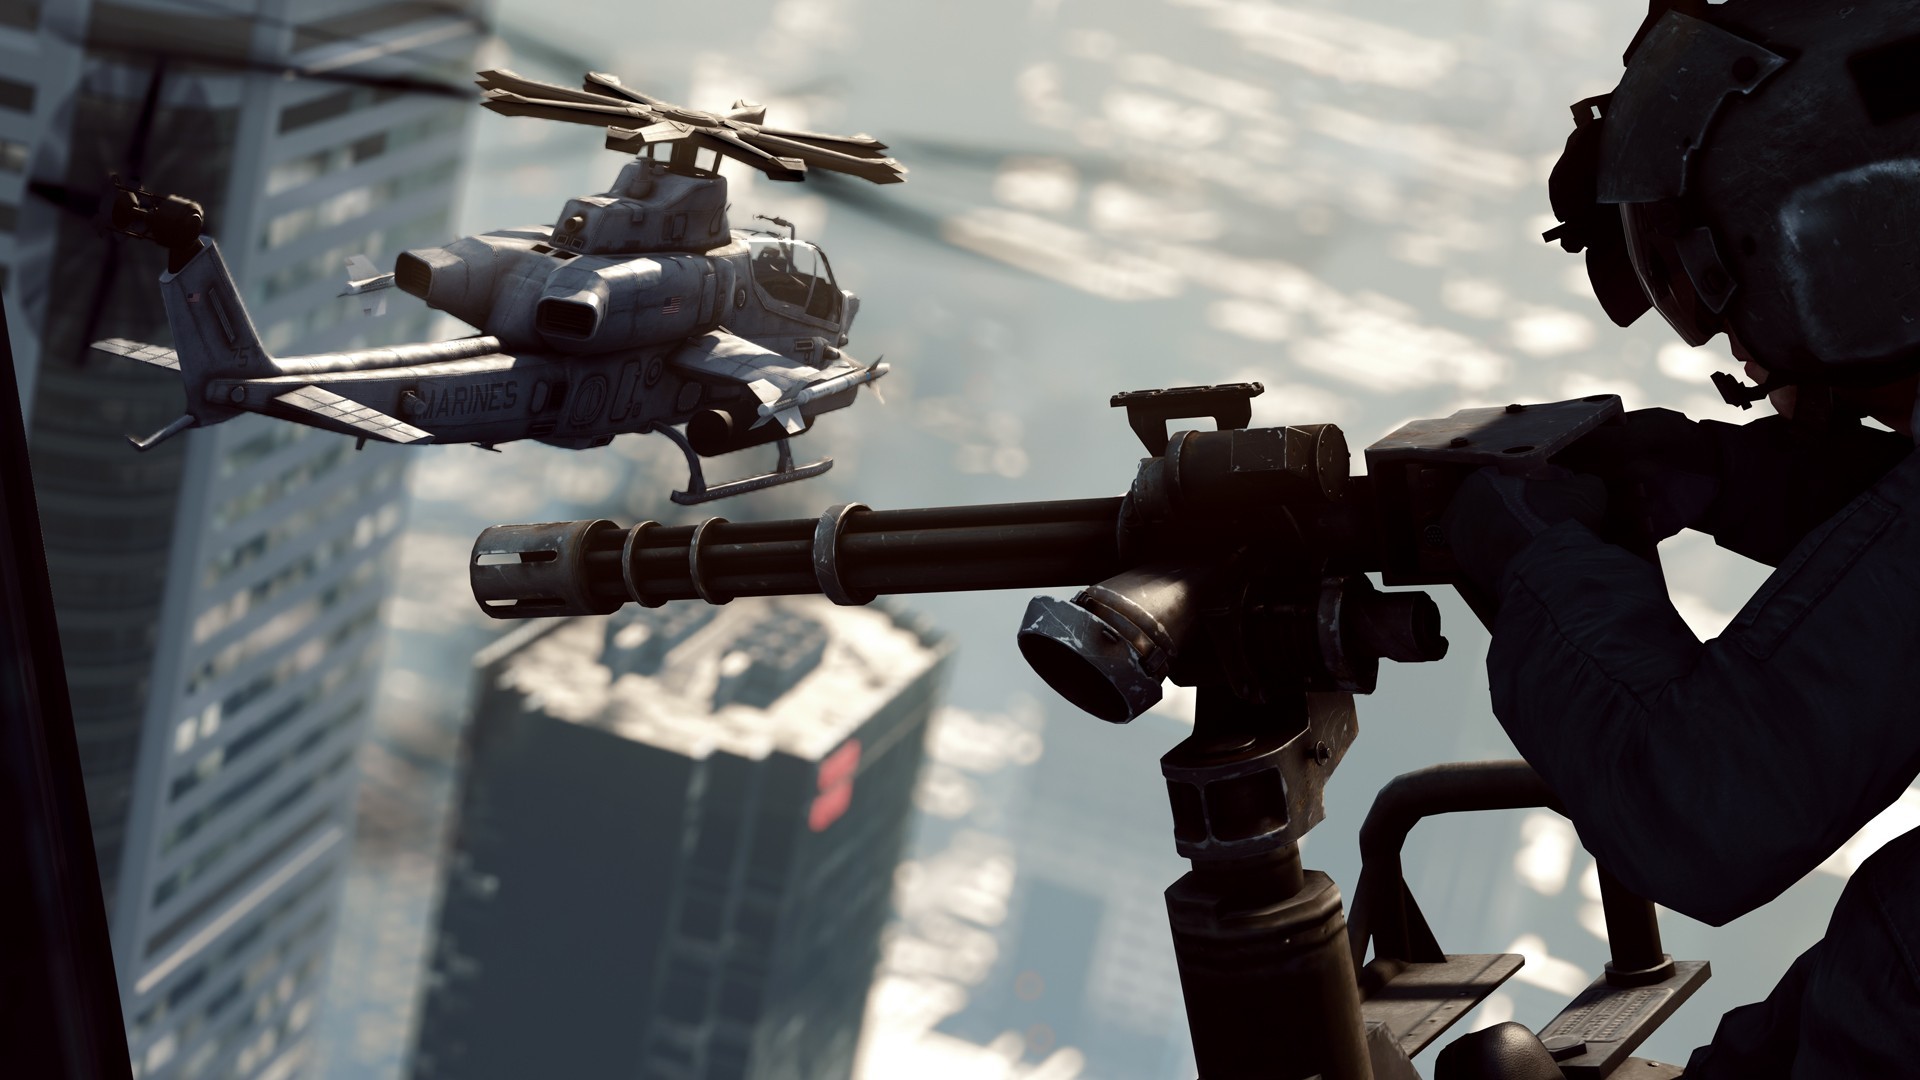 SONY PS4 Battlefield 4 Premium Edition EA BEST HITS Japanese